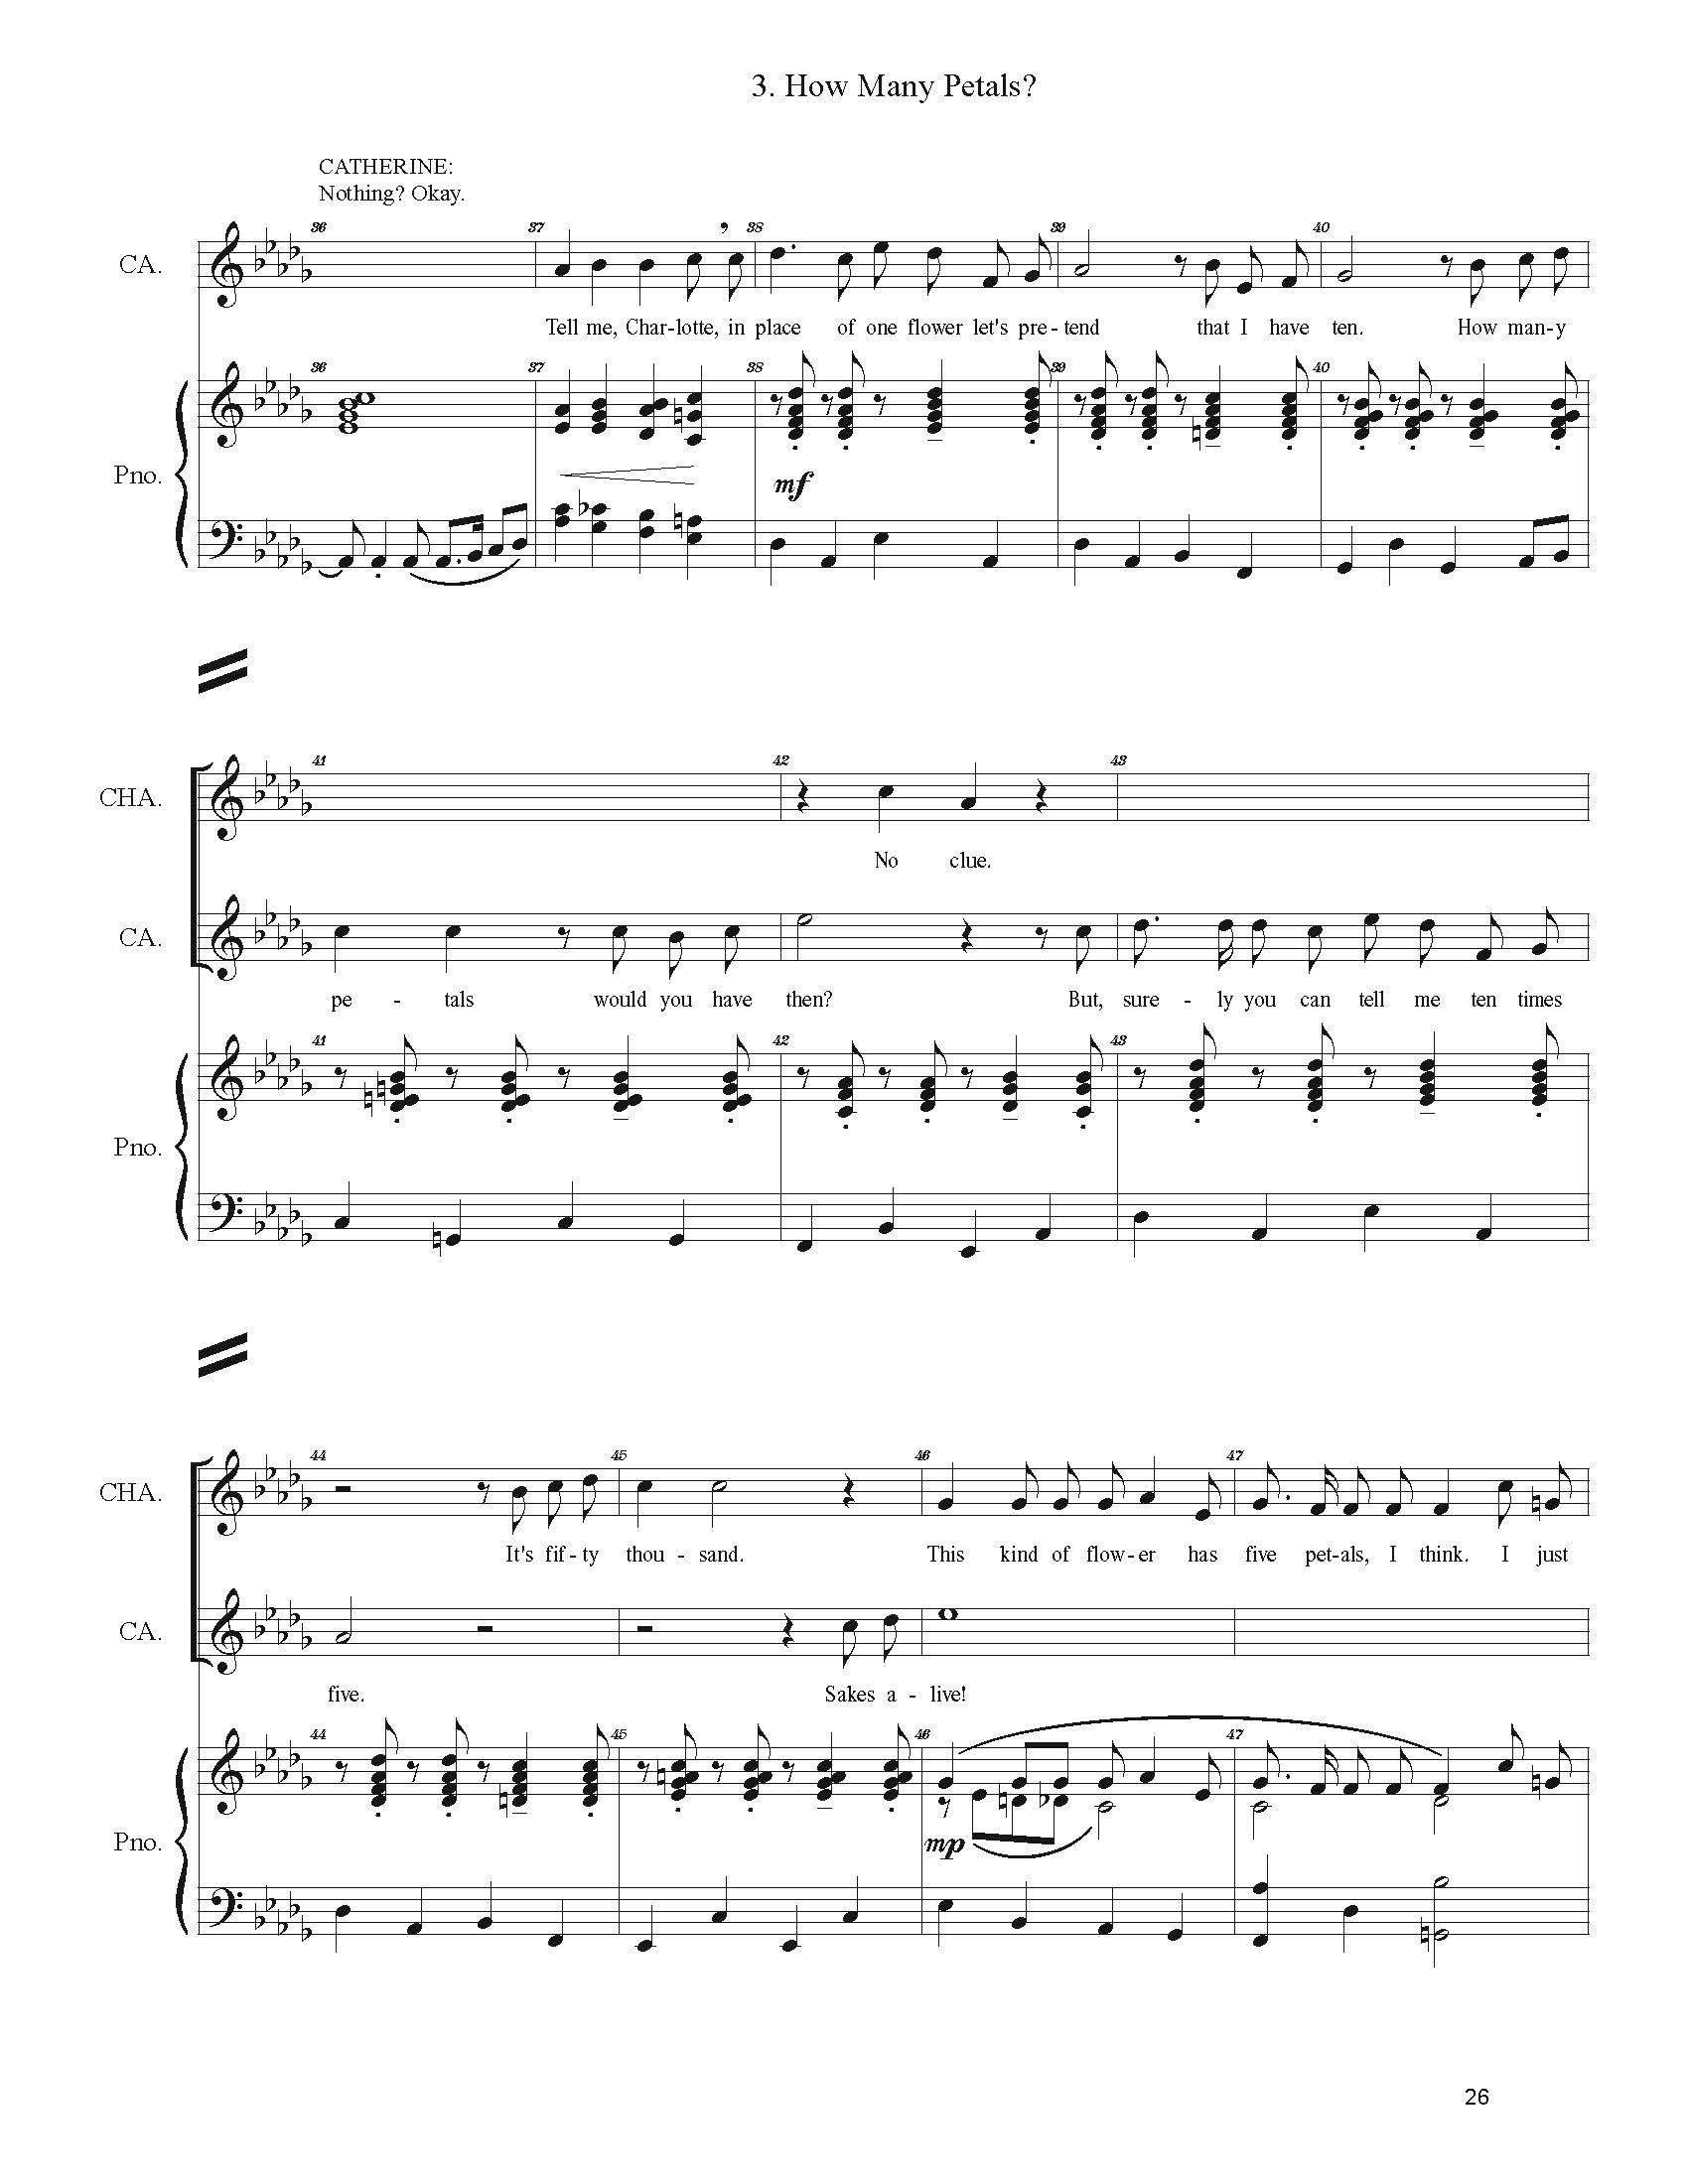 FULL PIANO VOCAL SCORE DRAFT 1 - Score_Page_026.jpg